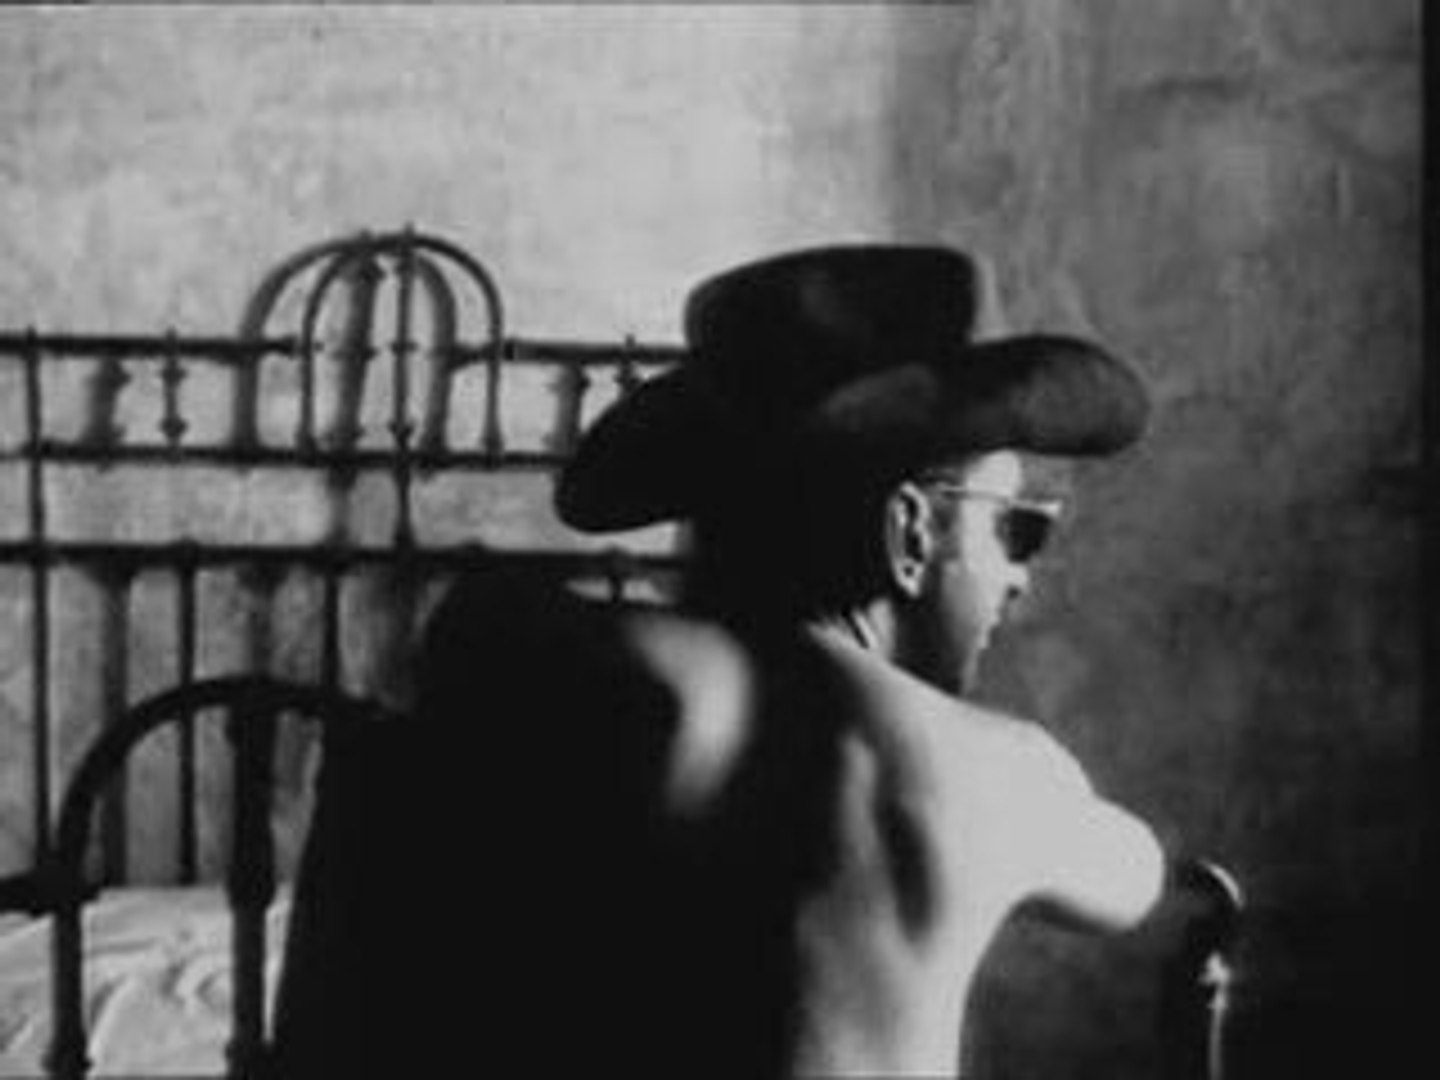 Depeche Mode - Personal Jesus (Mute Instrumental Version) - Vidéo  Dailymotion